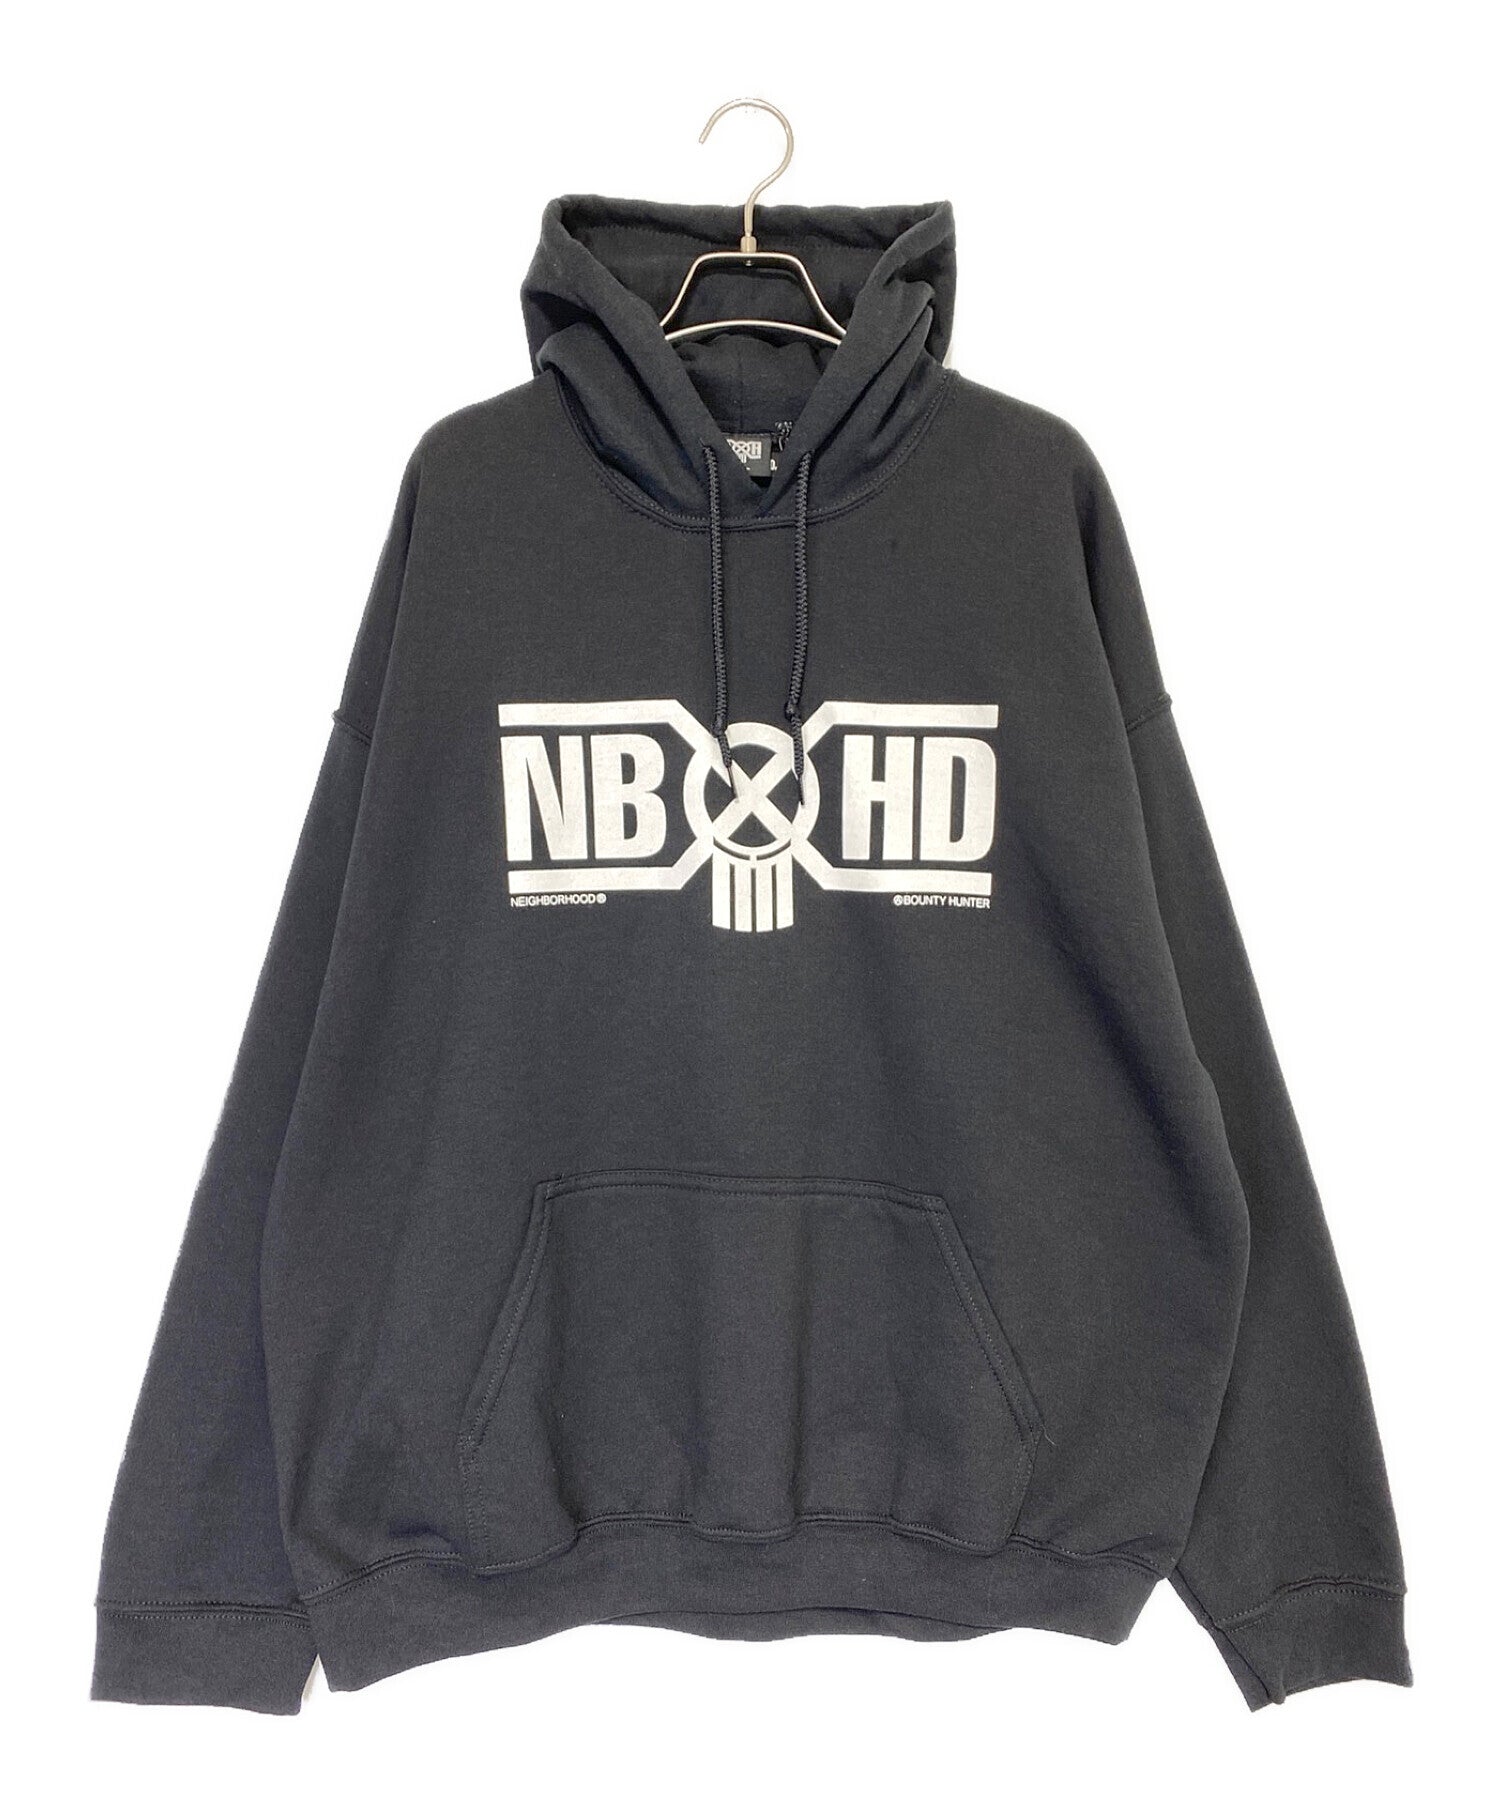 NEIGHBORHOOD BOUNTY HUNTER LS BLACK XL-